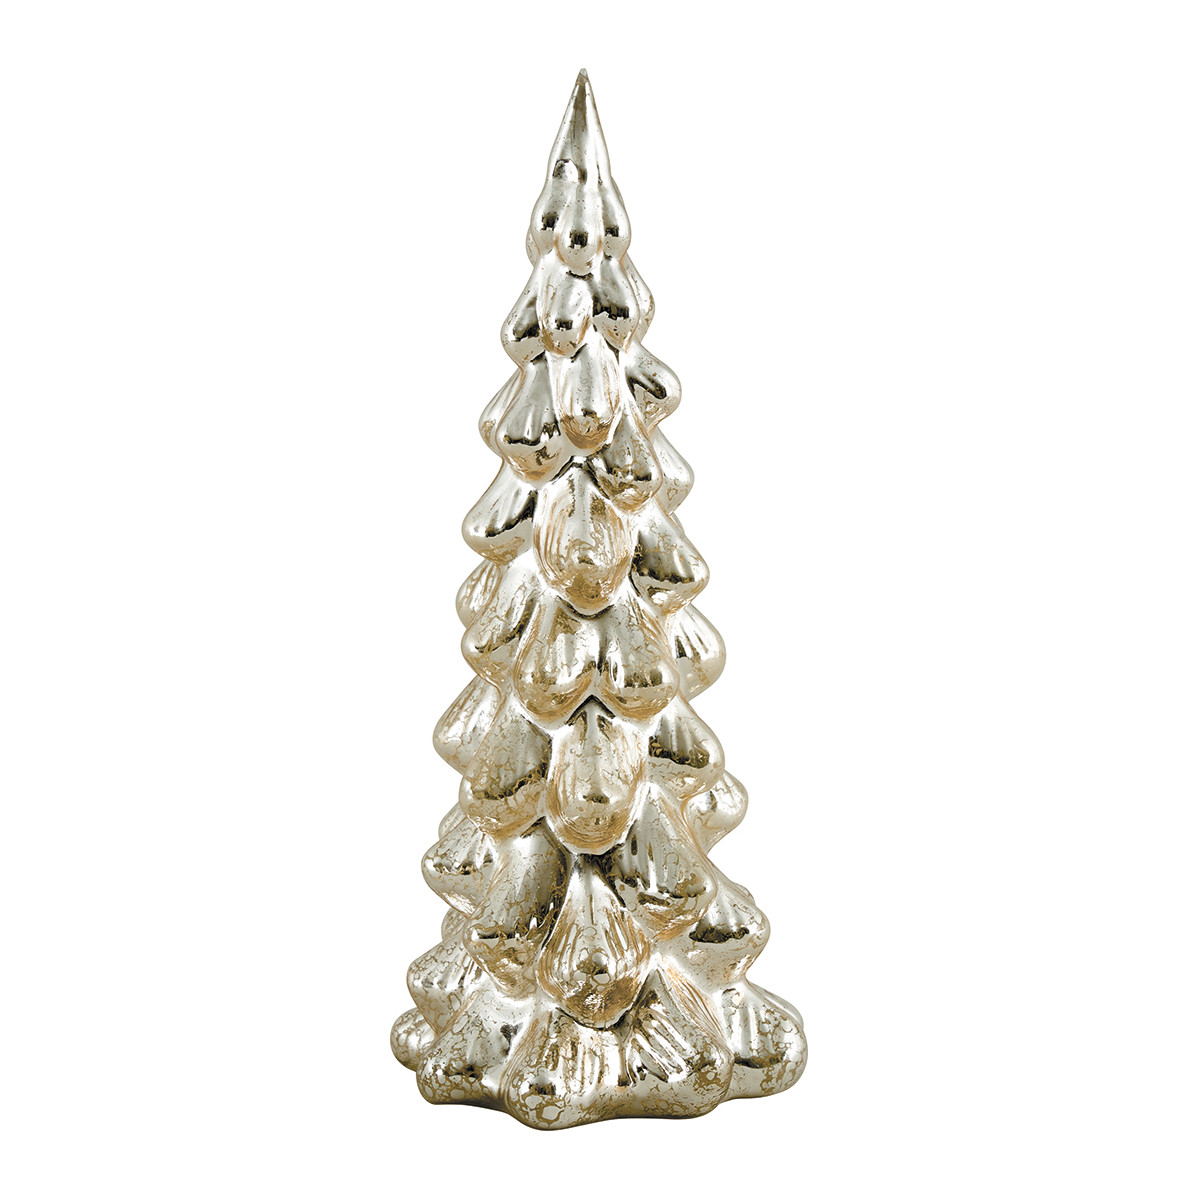 Abeto luminoso en cristal de mercurio dorado – Modelo pequeño Navidad Mathilde M